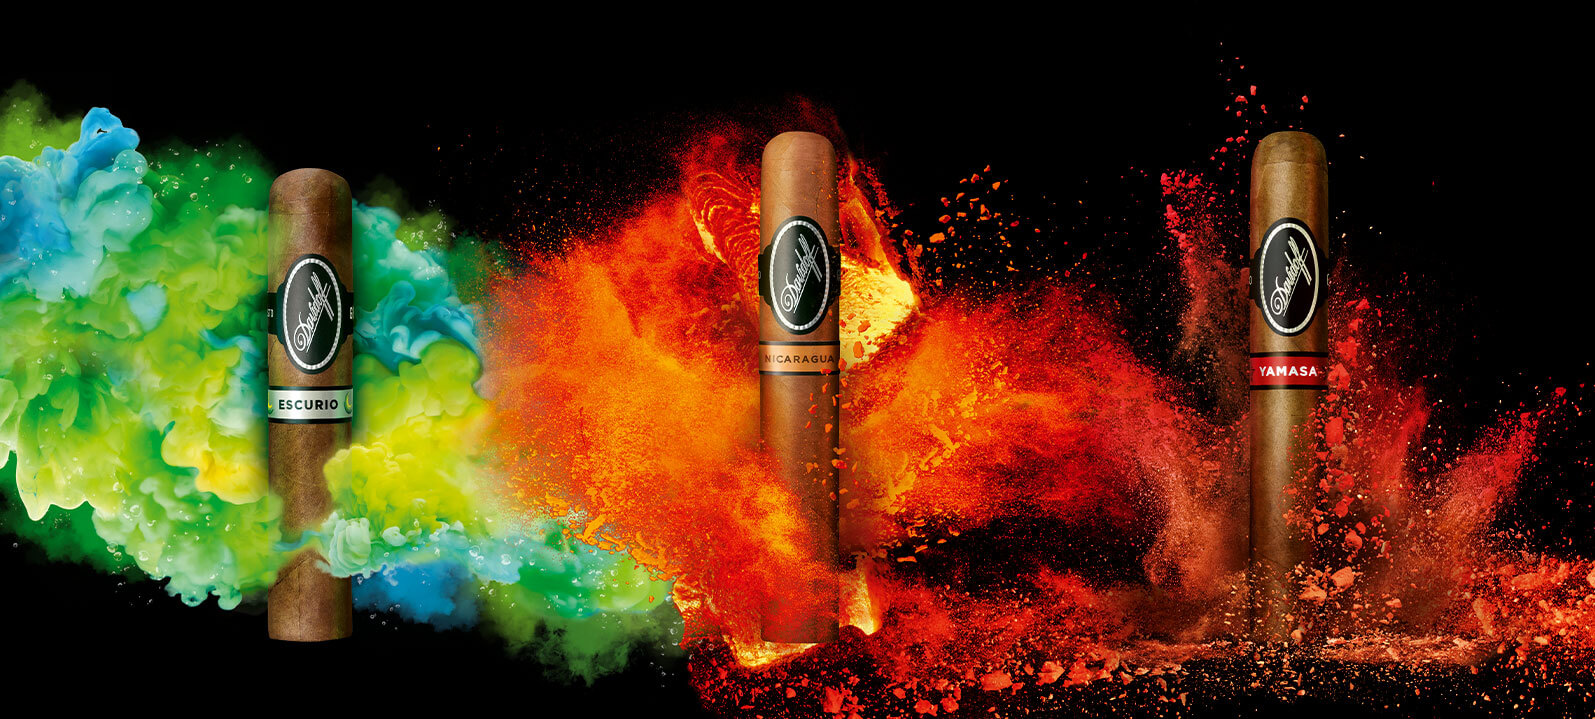 Discover Davidoff Black Band Collection Cigars - Escurio, Nicaragua and Yamasa